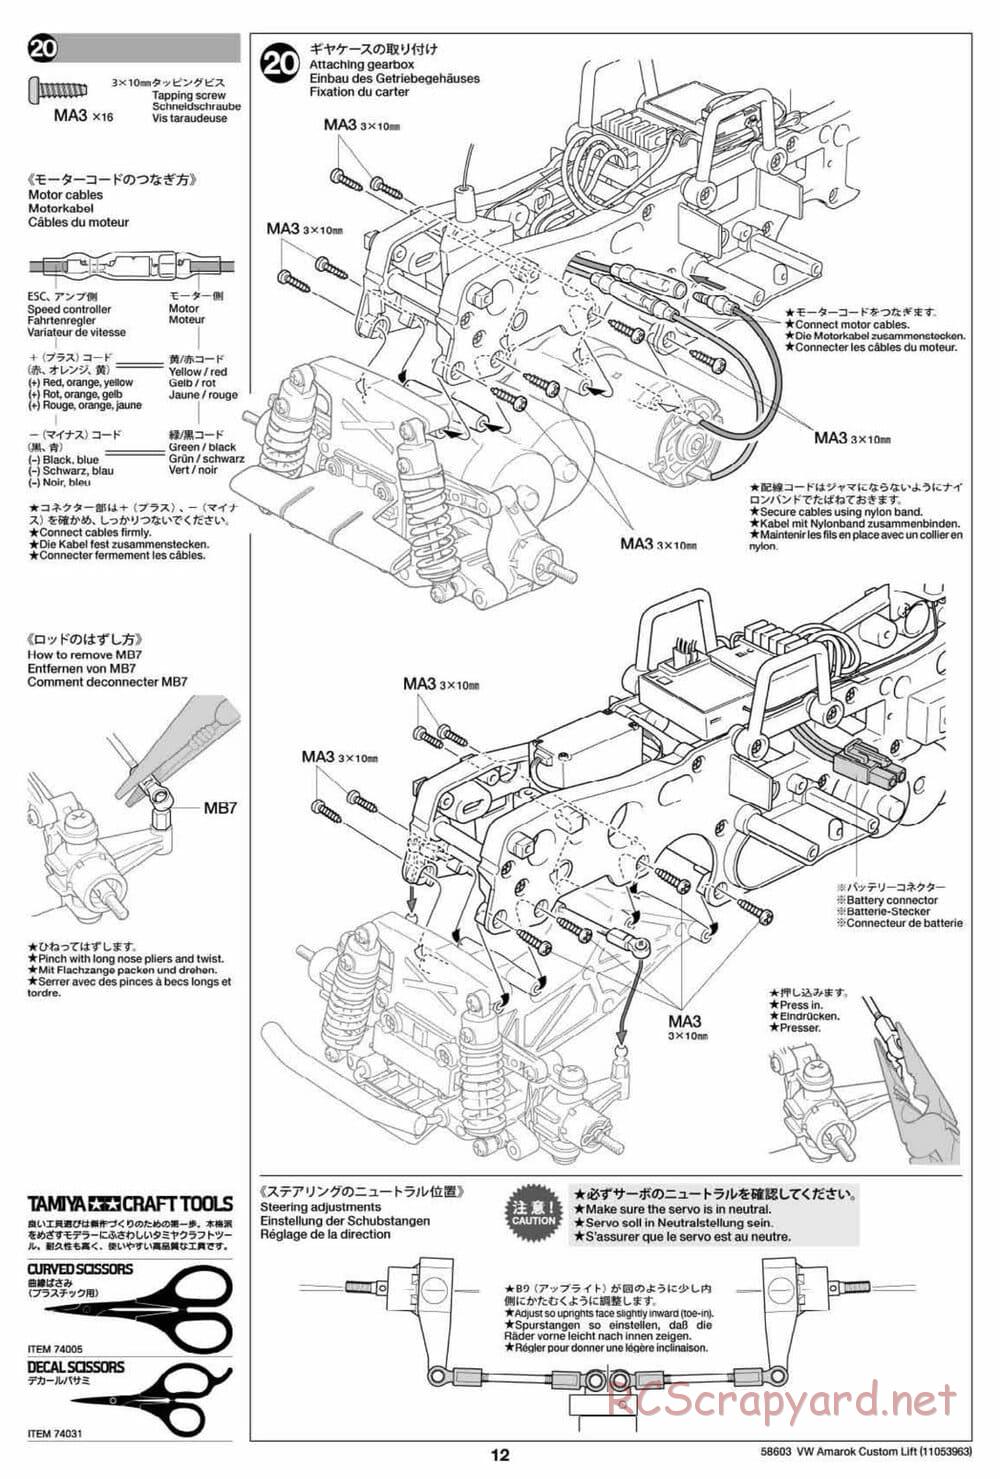 Tamiya - Volkswagen Amarok Custom Lift - WT-01N Chassis - Manual - Page 12